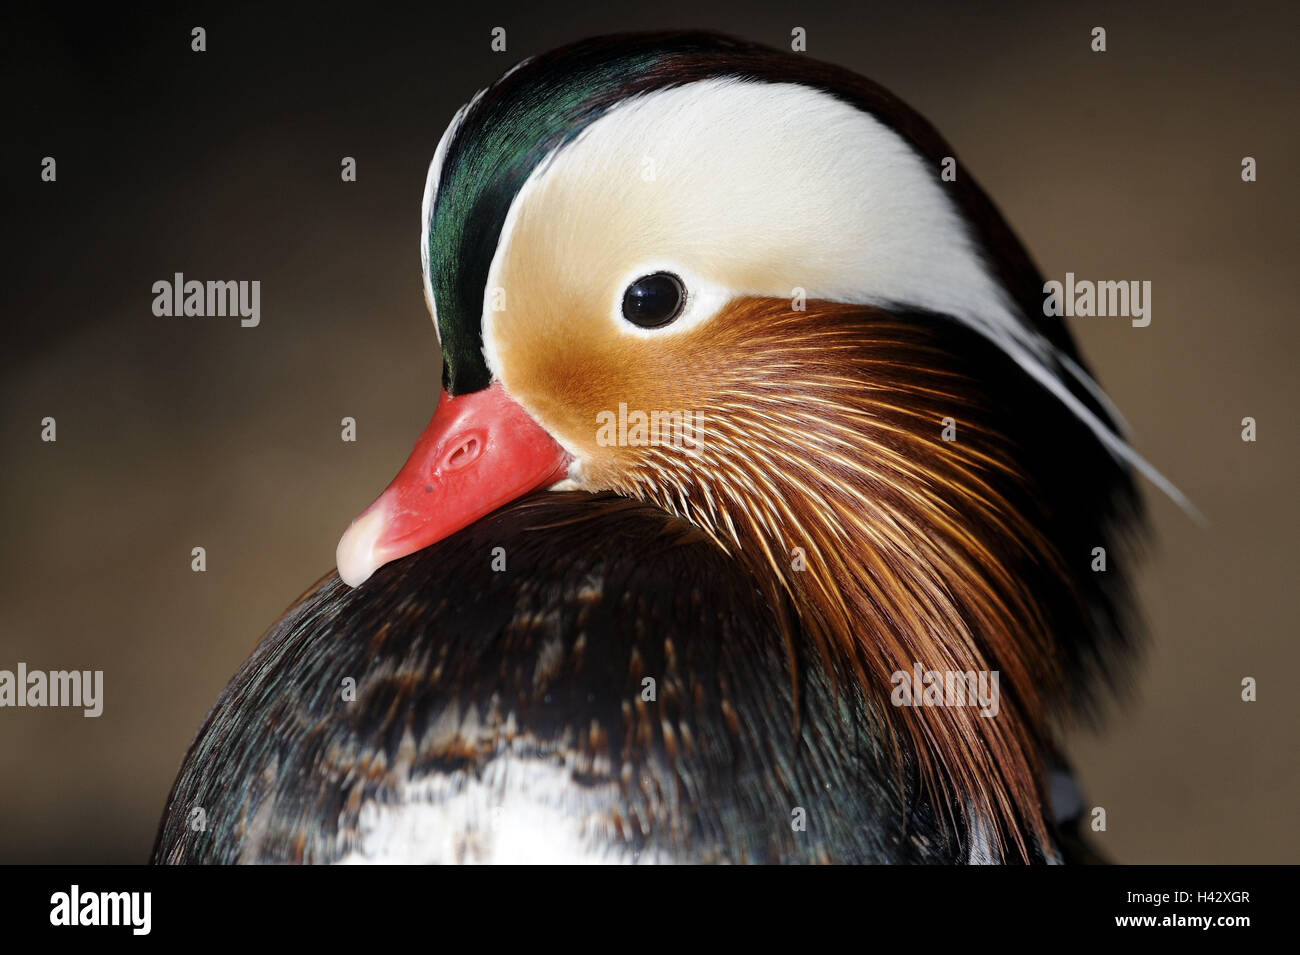 Mandarin duck, Aix galericulata, drake, portrait, side view, nature, animal, animal portrait, little man, manly, bird, feathers, plumage, plumage, beauty, beak, Stock Photo